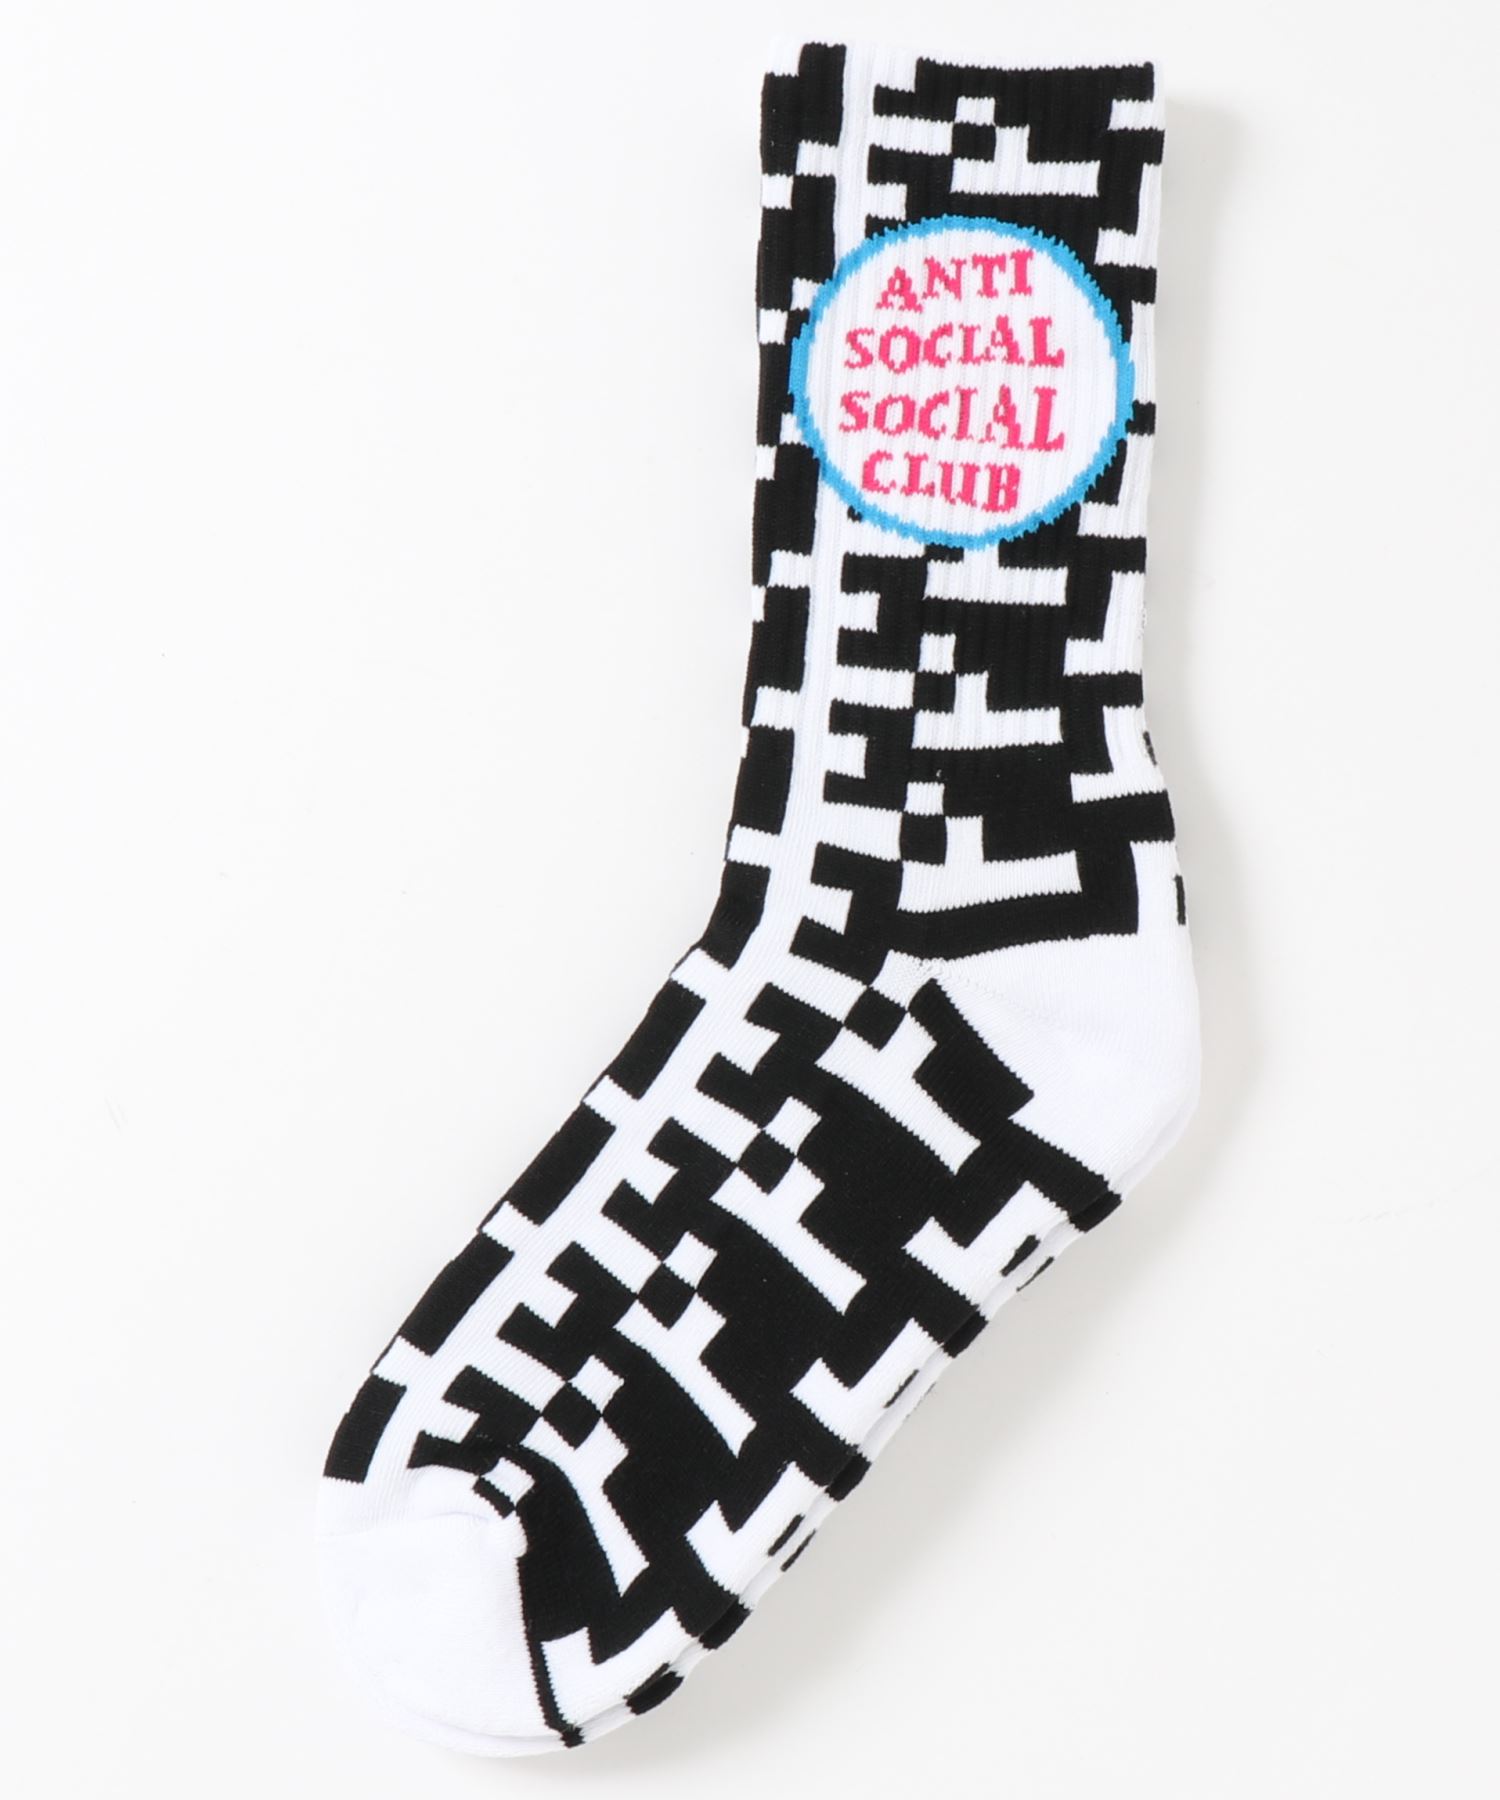 ANTI SOCIAL ランキングTOP10 CLUBAntiSocialSocialClub アンチソーシャルソーシャルクラブ SSTATIC WHITE BLACK SOCKS 靴下 ロゴソックス 超美品の